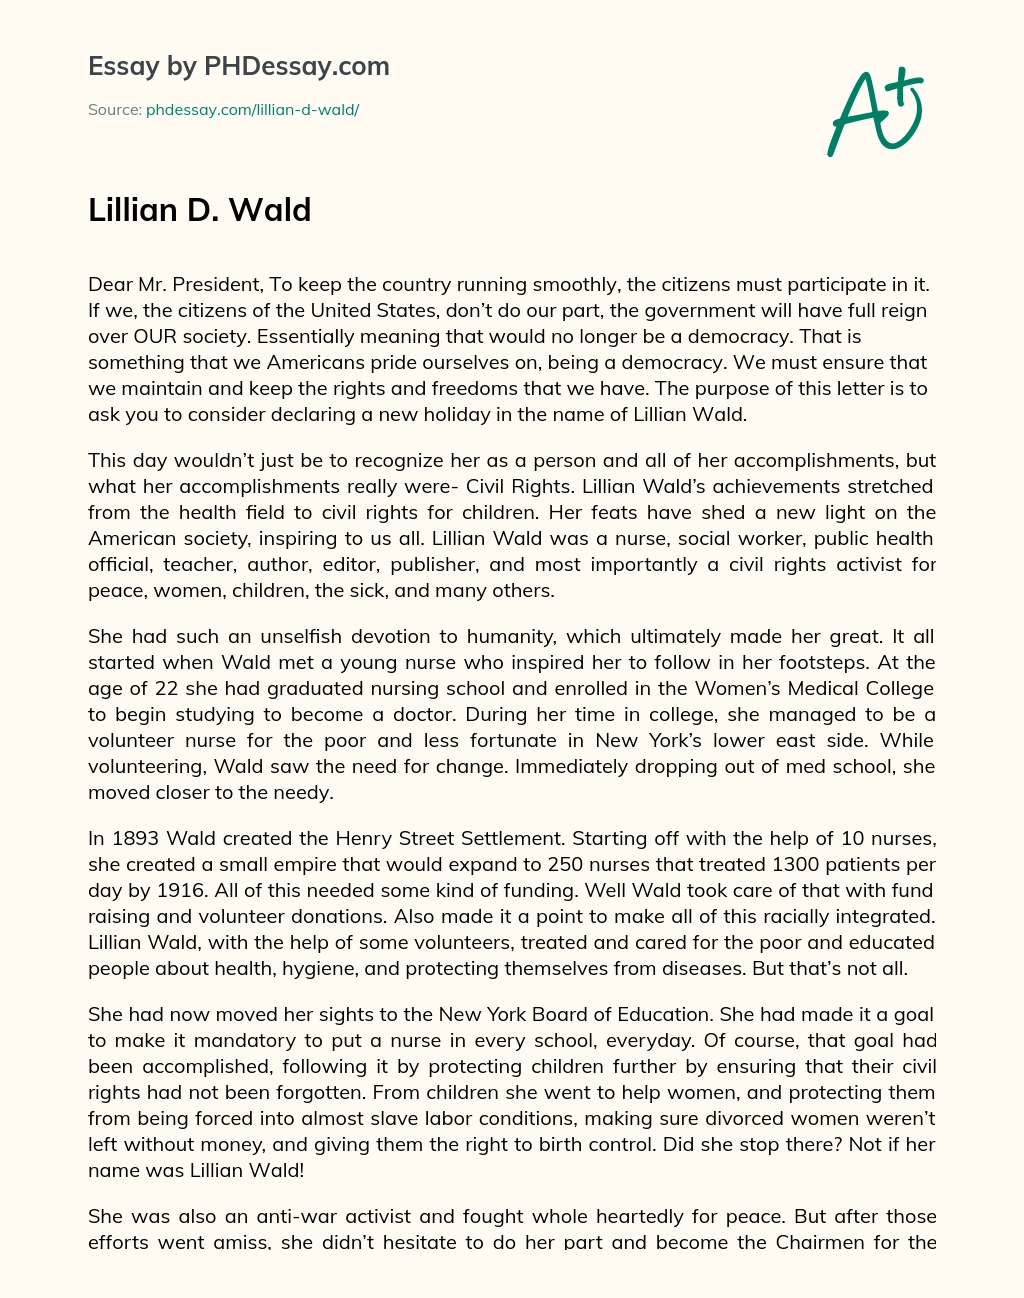 Lillian D. Wald essay